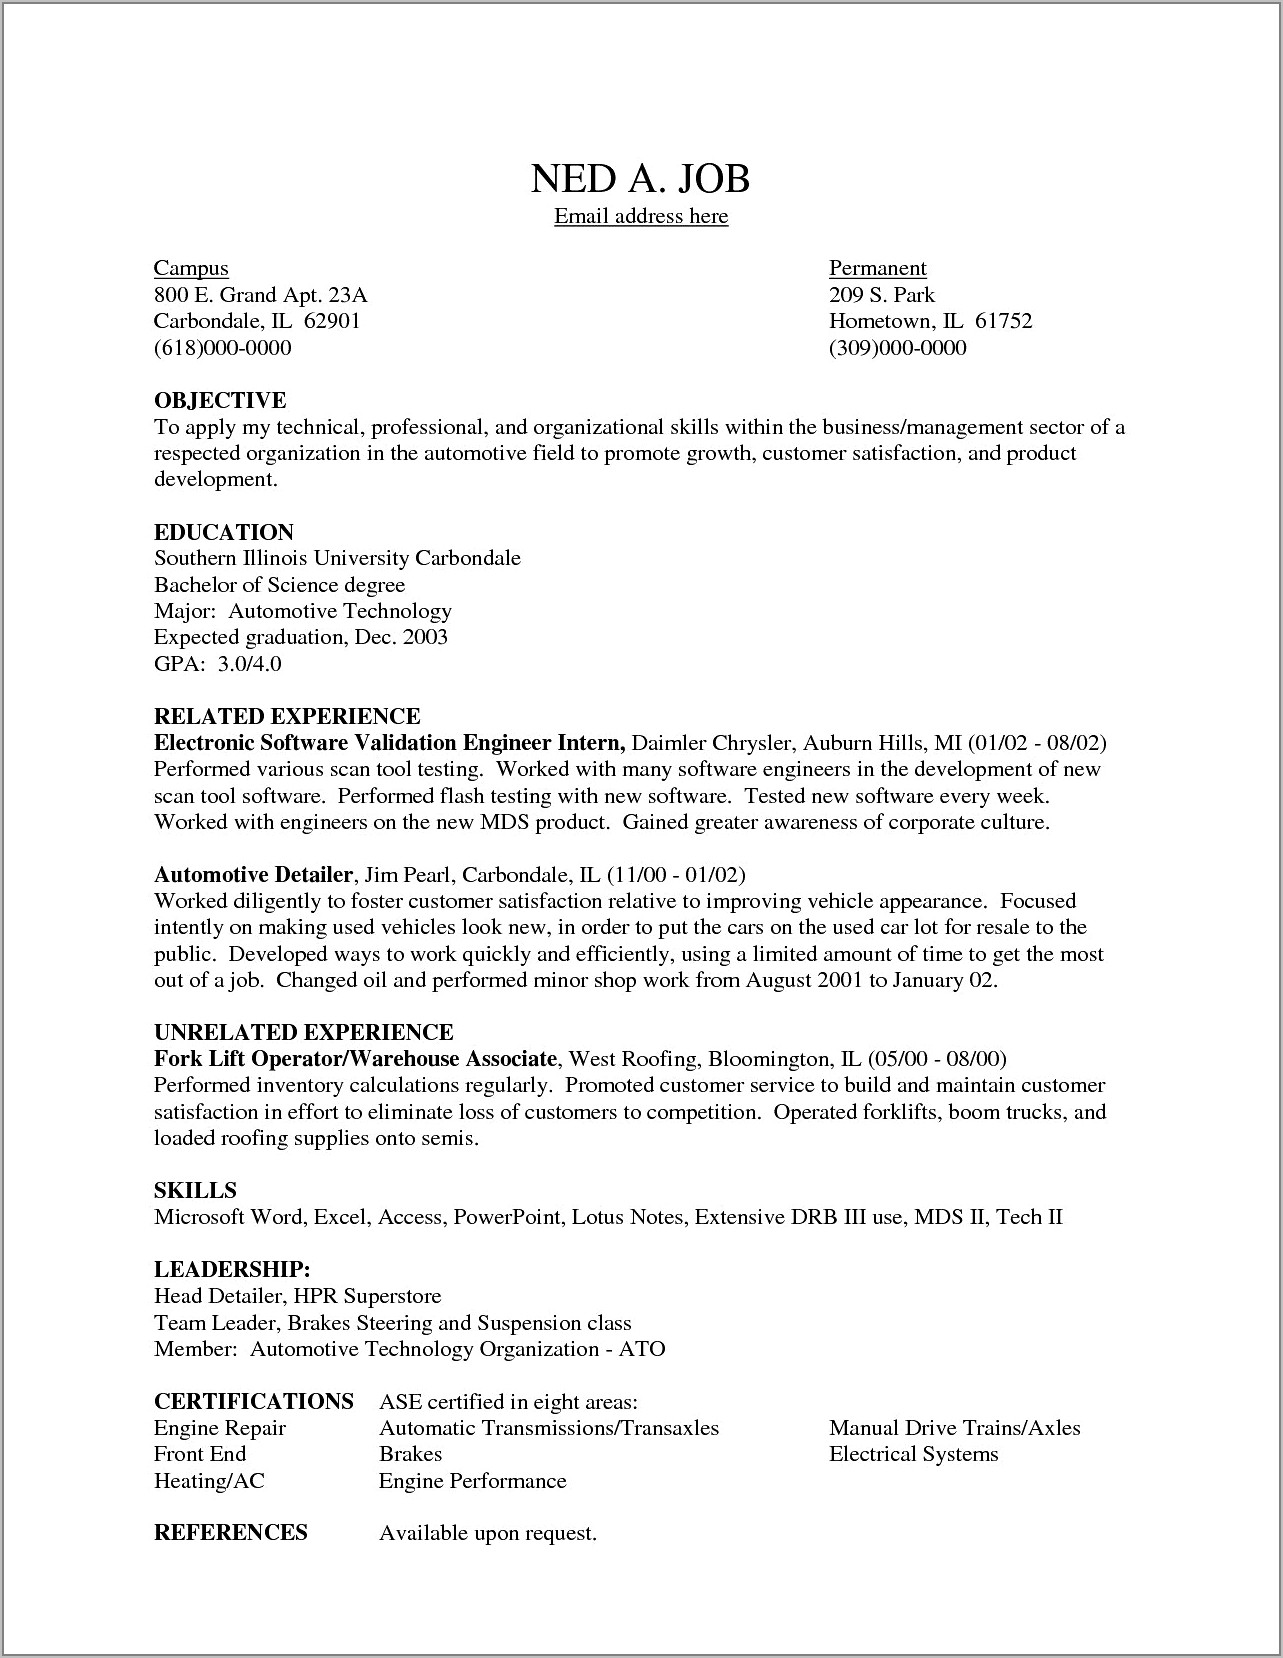 Sample Of Warehouse Resume